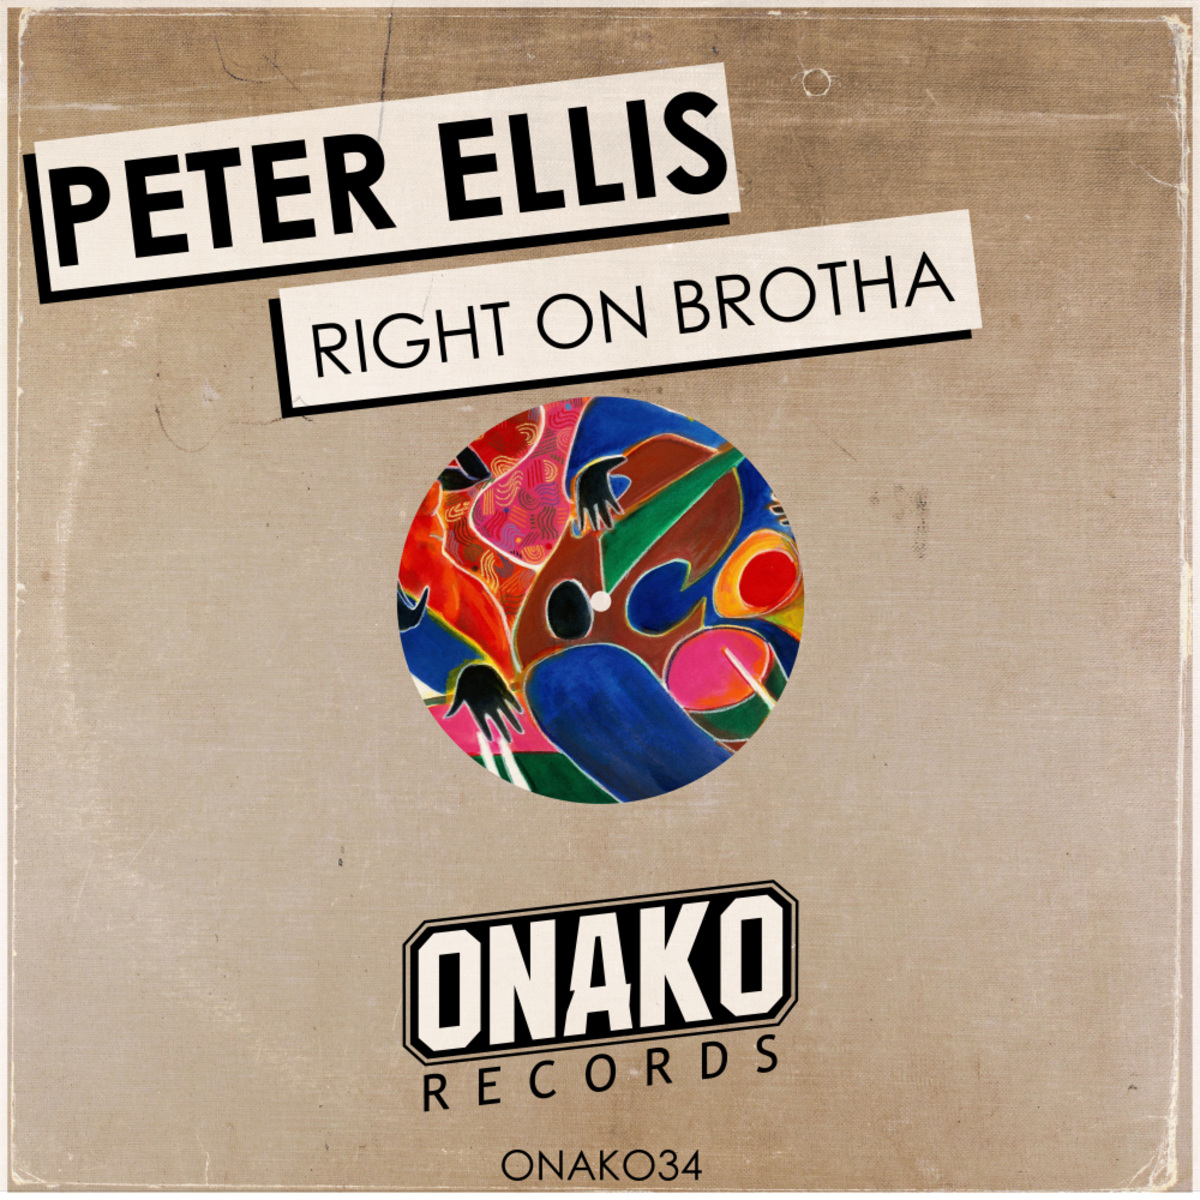 Peter Ellis - Right On Brotha / Onako Records